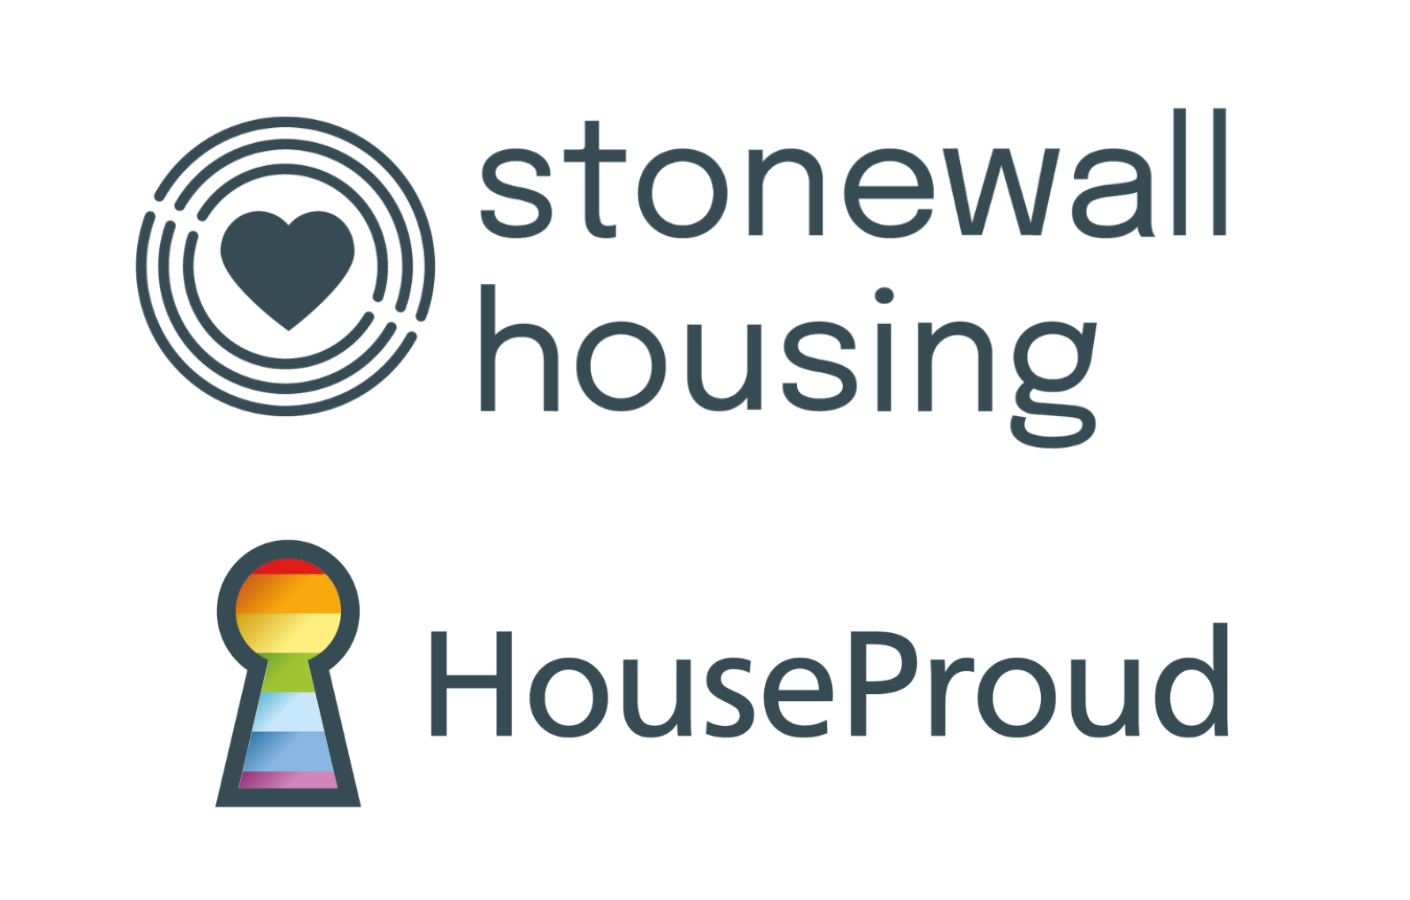 stonewall housing and houseproud logos